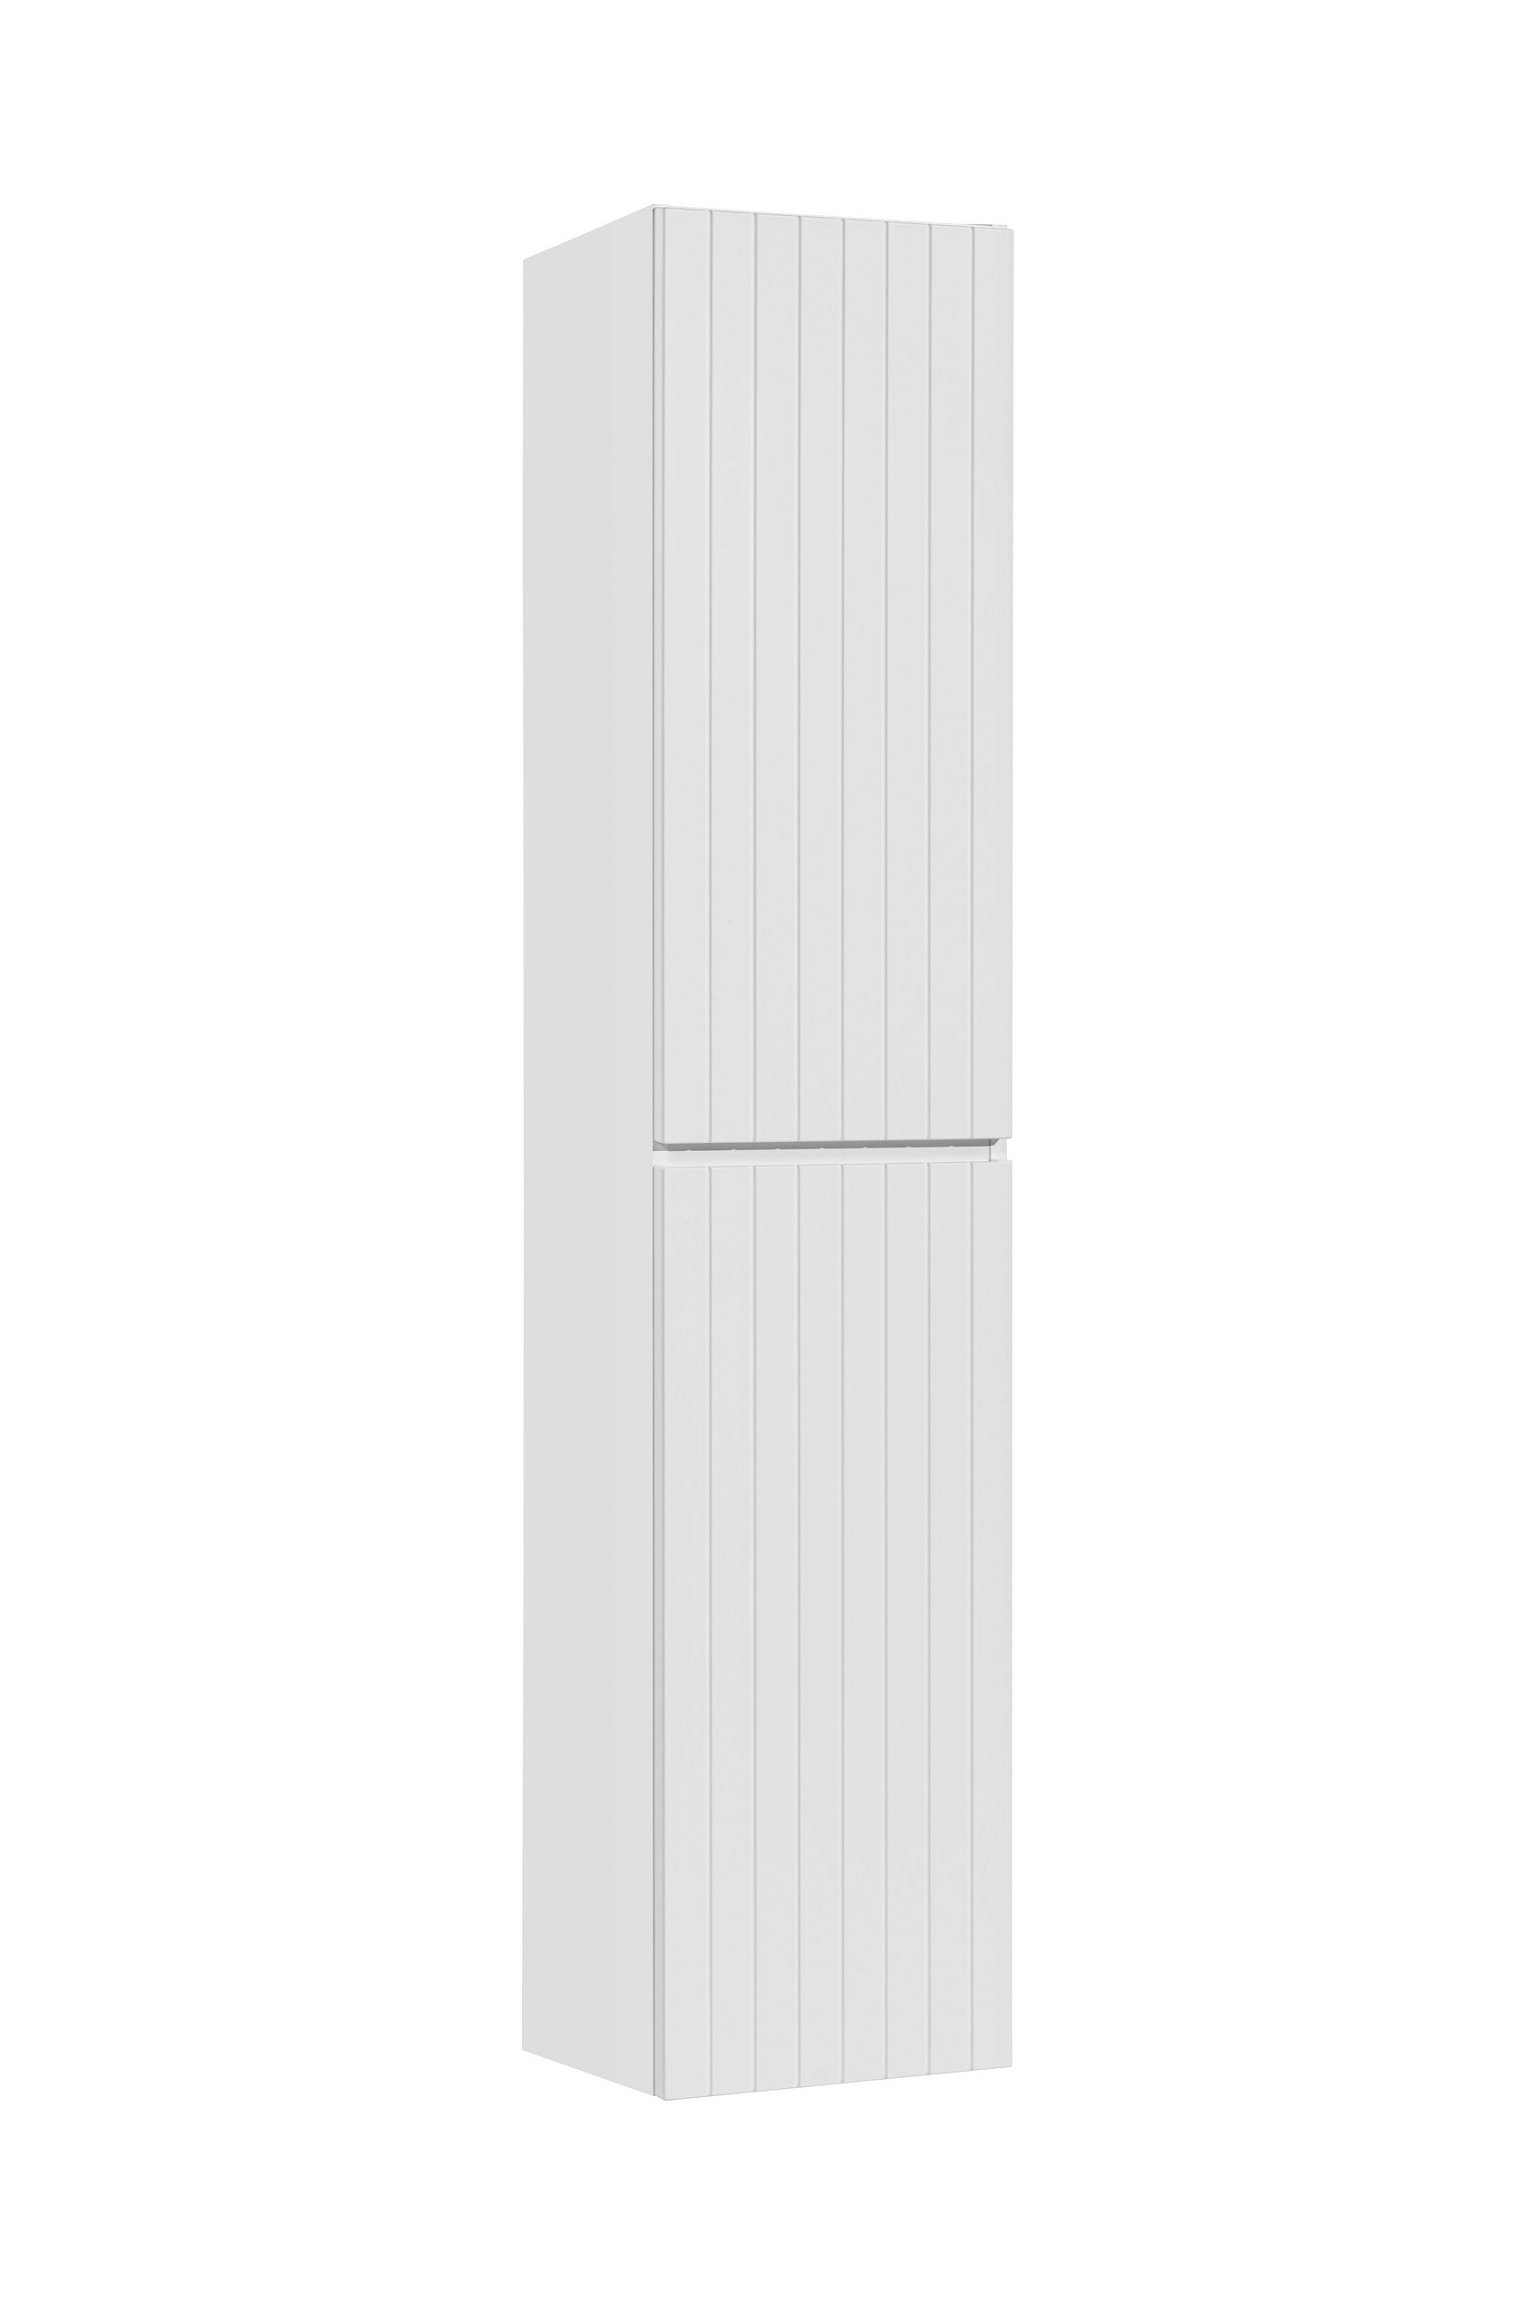 Vonios spintelė COMAD ICONIC WHITE 80-01-D-2D, balta